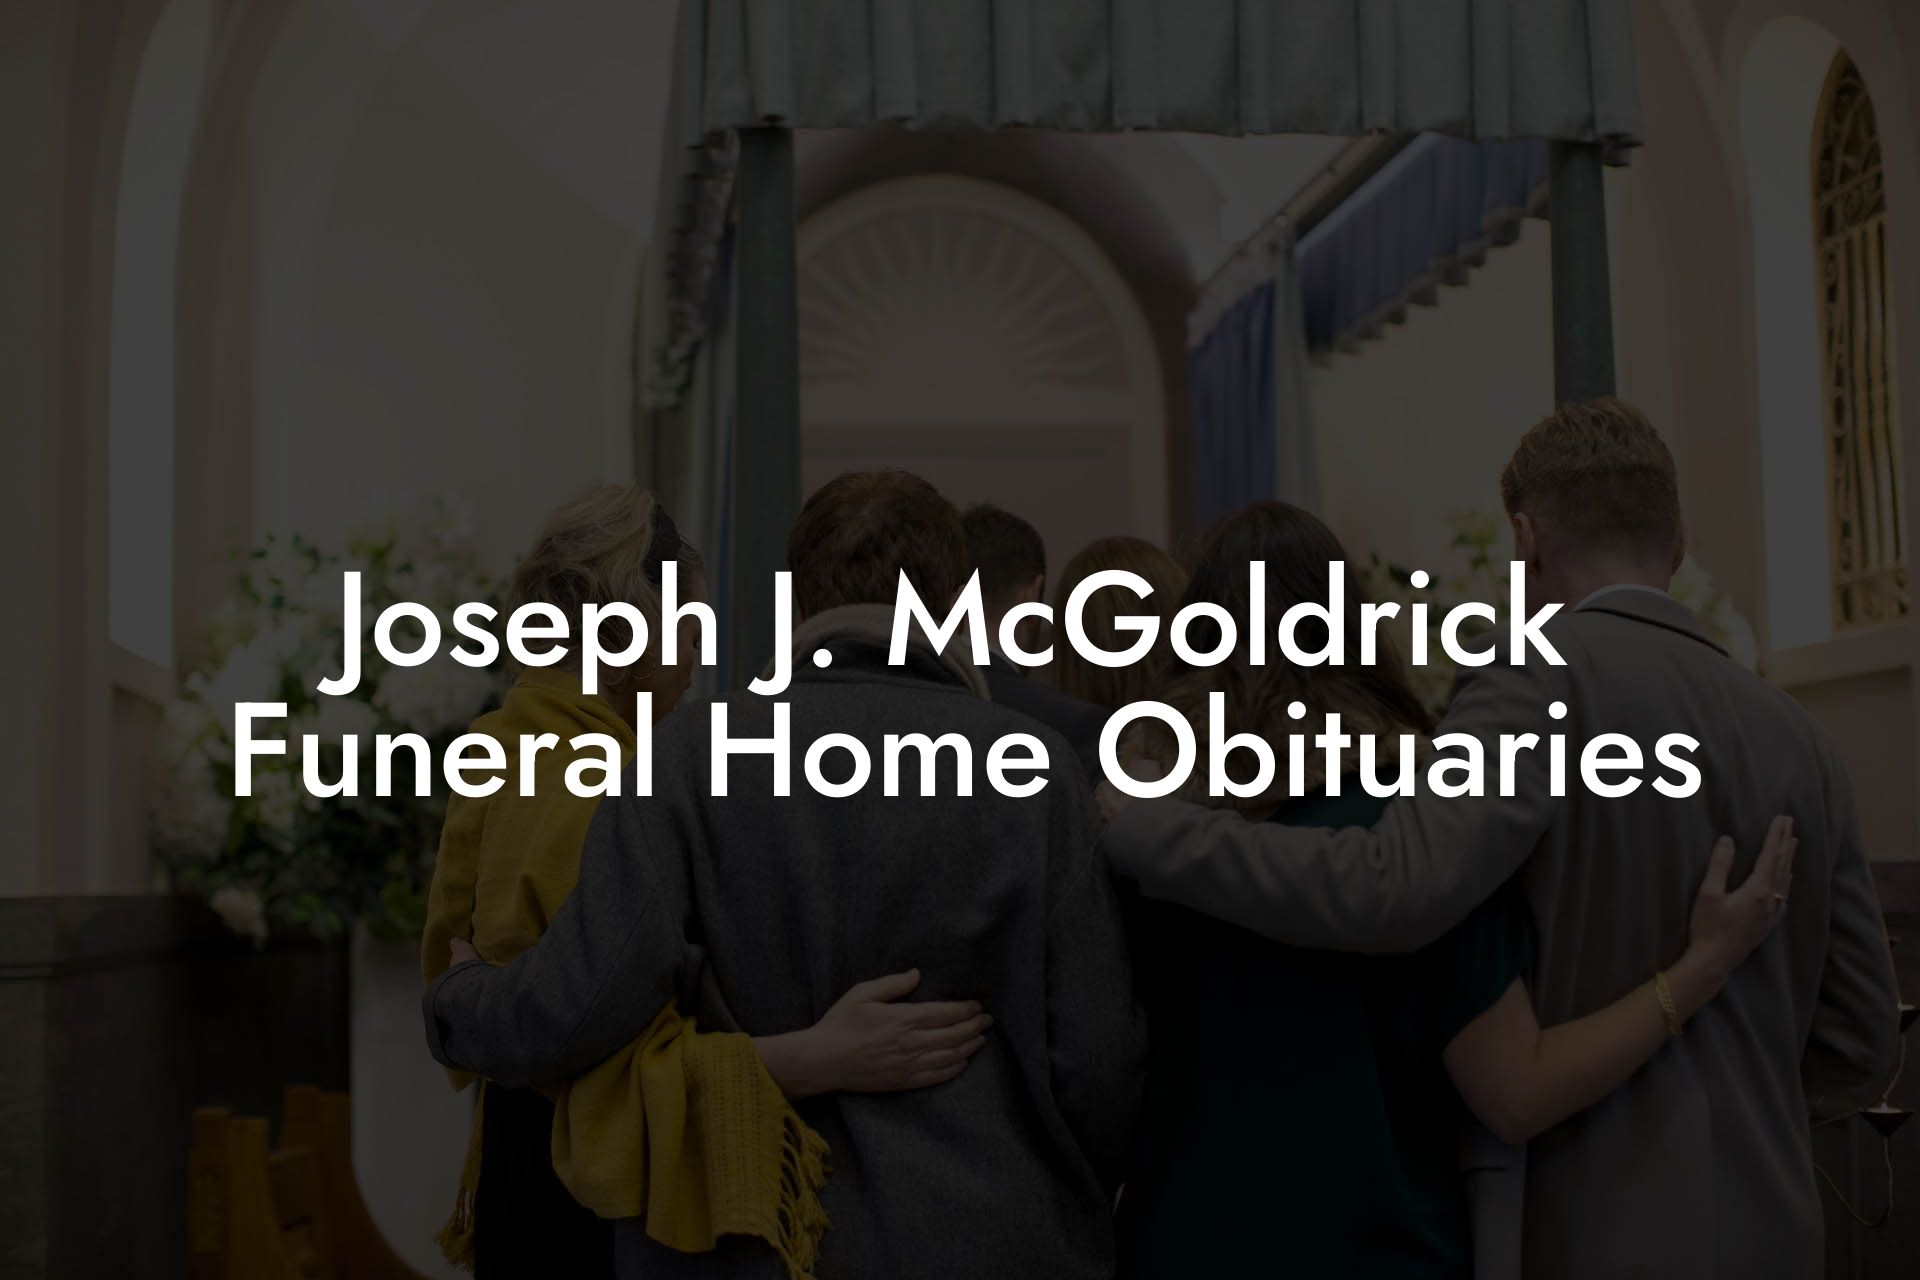 Joseph J. McGoldrick Funeral Home Obituaries